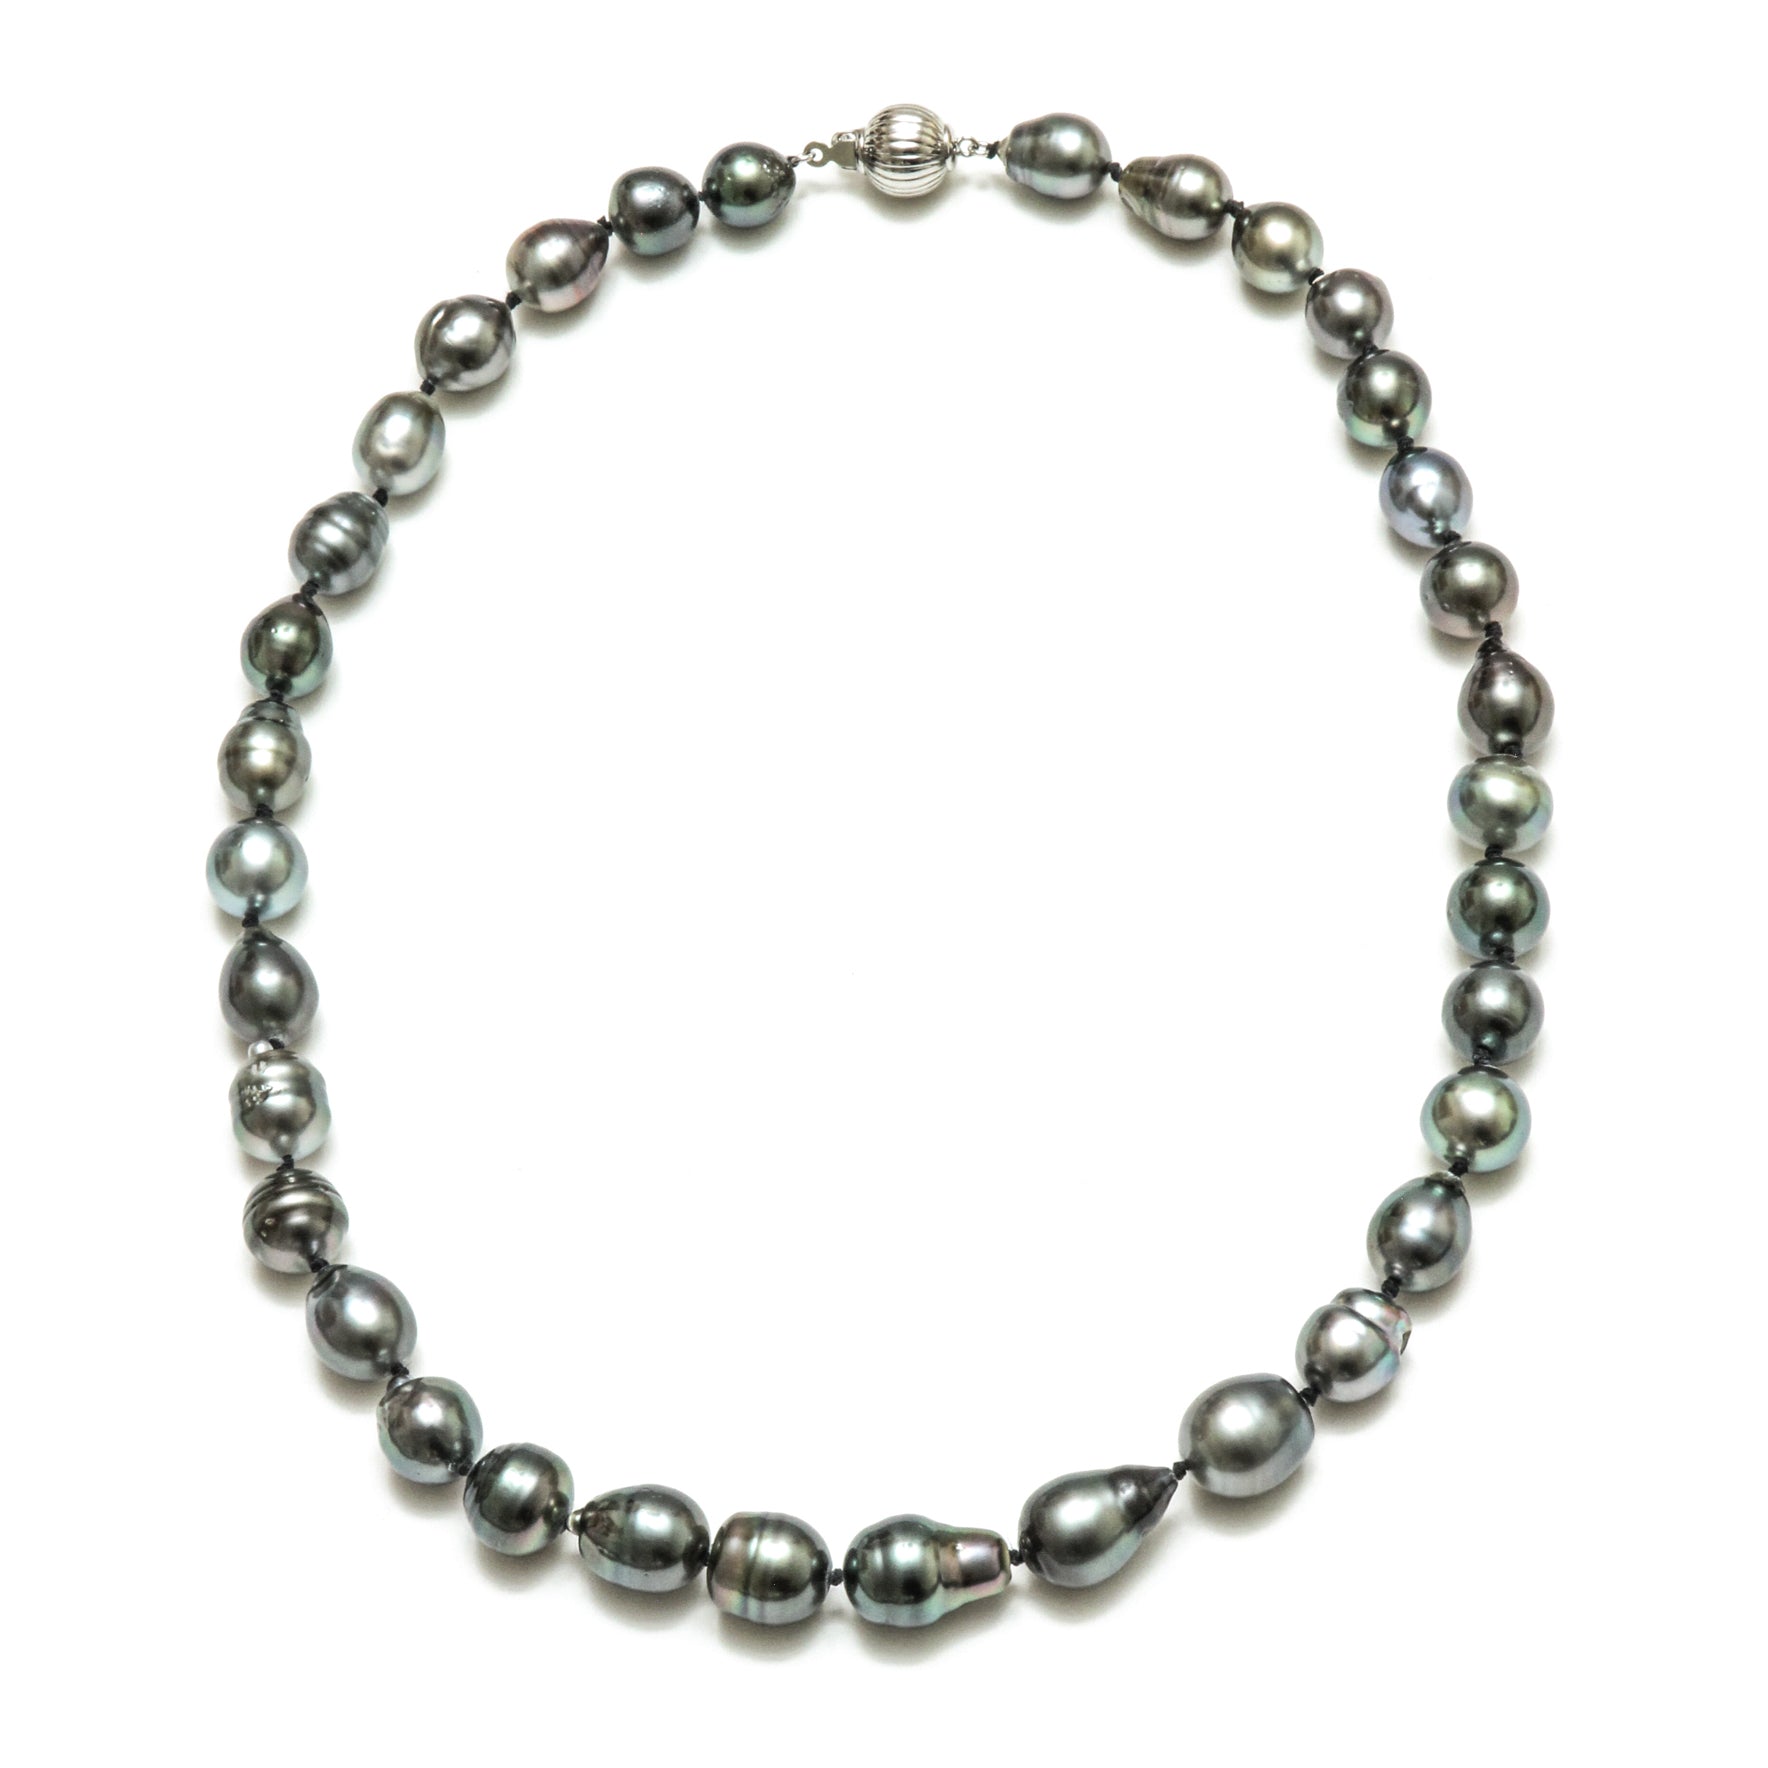 12-13mm Super Peacock Semi-Drop/Baroque Loose Tahitian Pearls – Continental  Pearl Loose Pearl, Pearl Necklaces & Jewelry